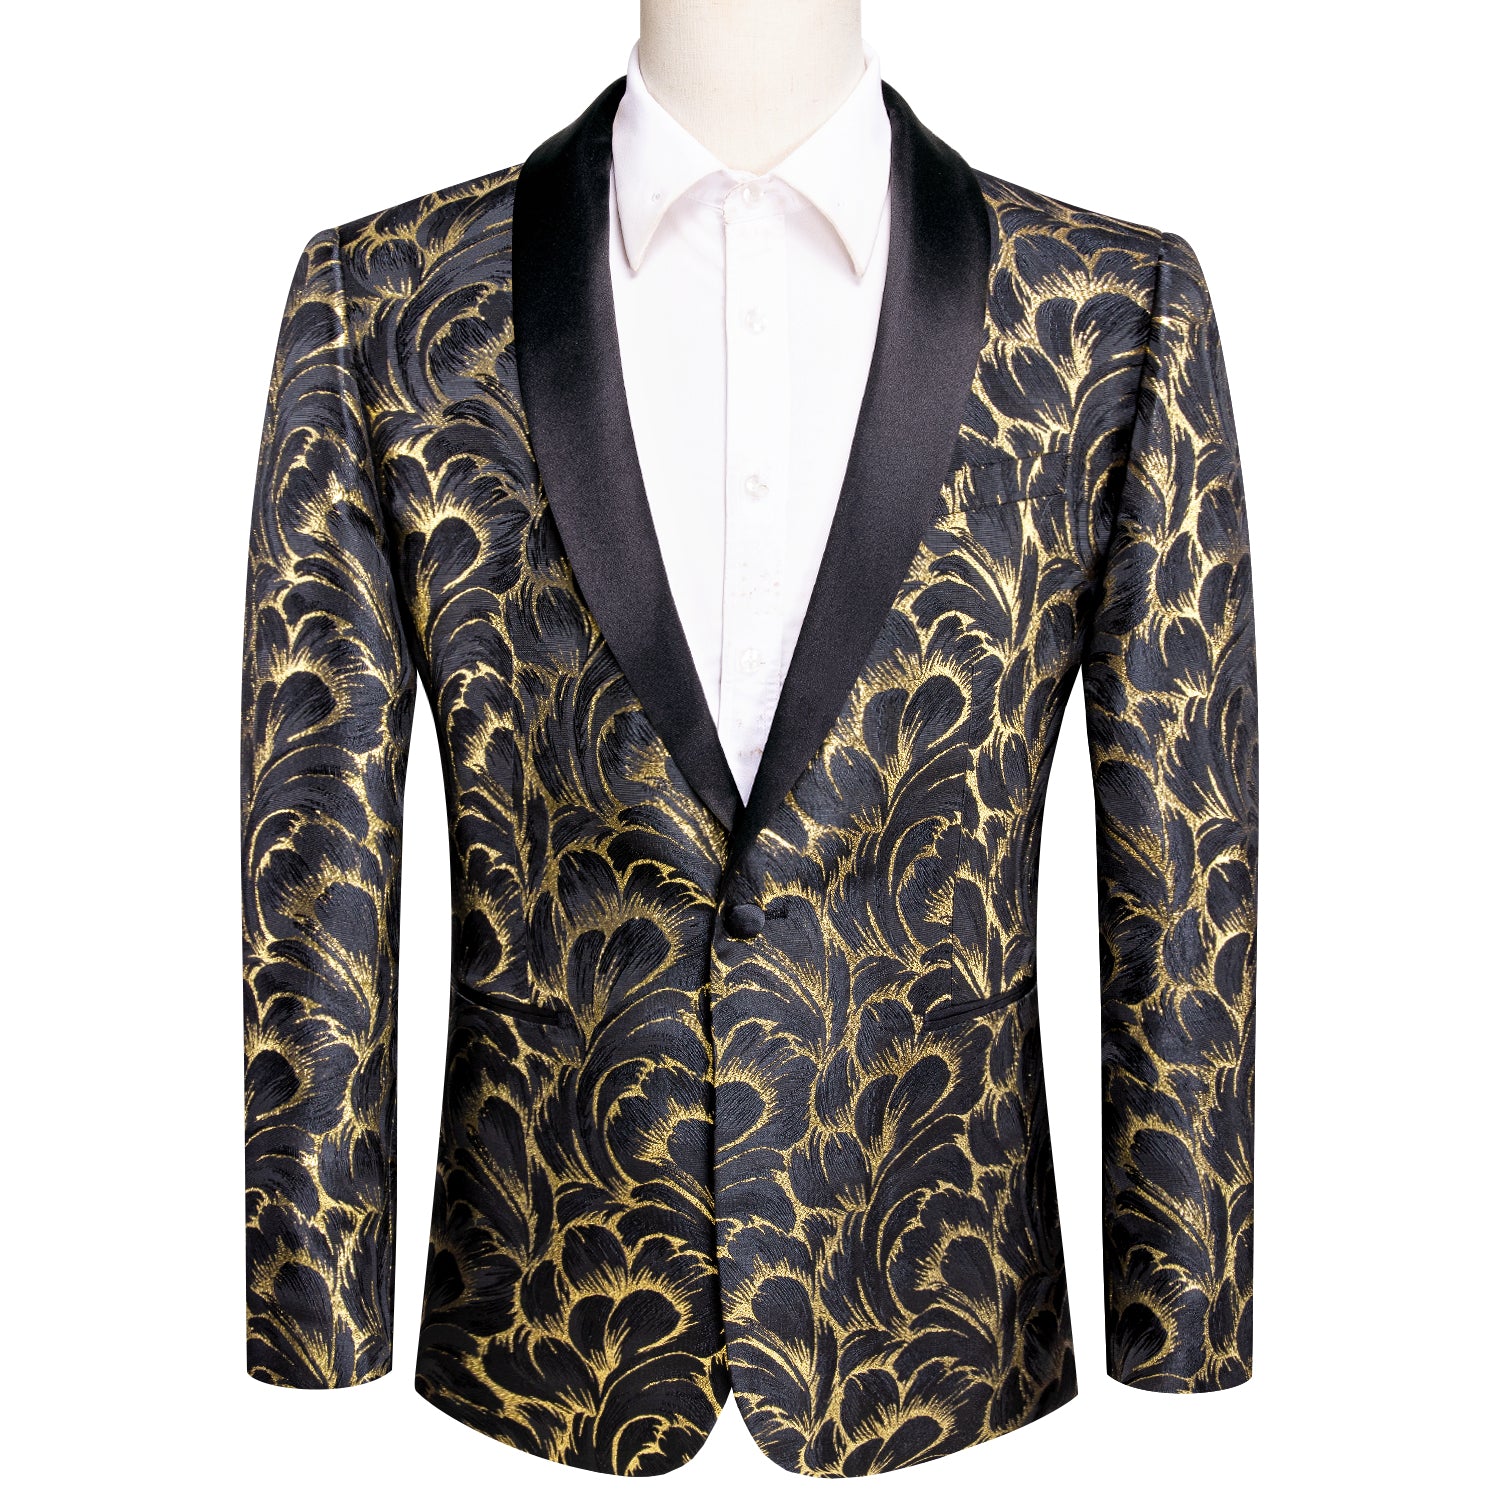 New Luxury Black Gold Feather Men's Suit Set